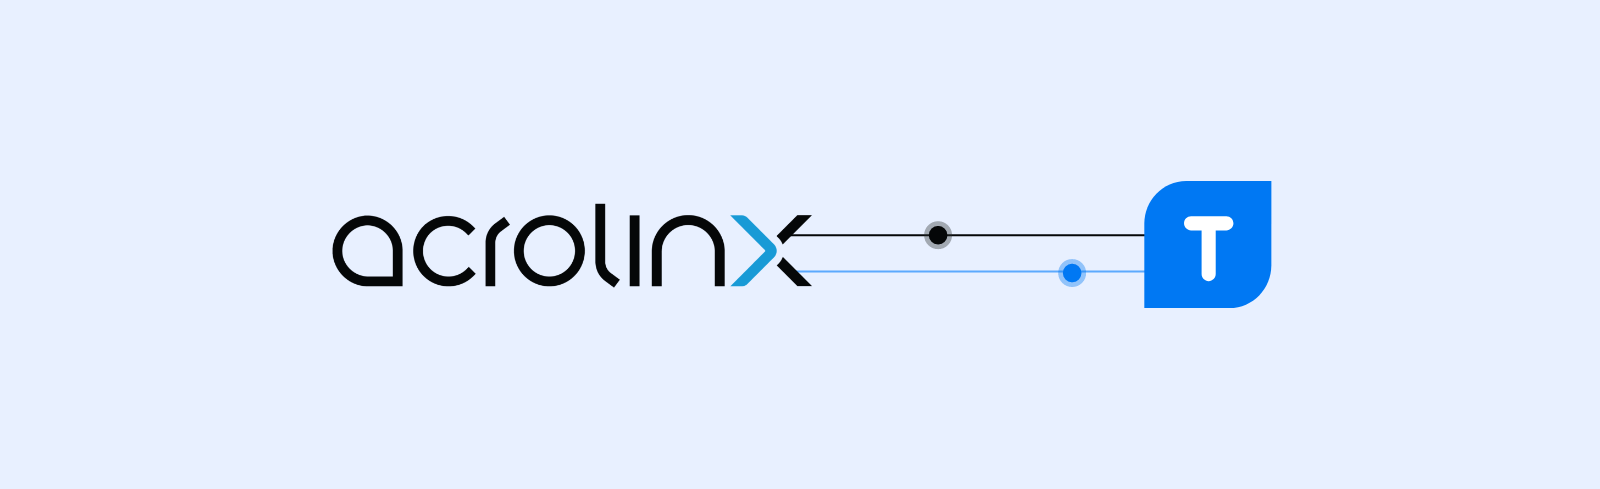 Acronlinx logo